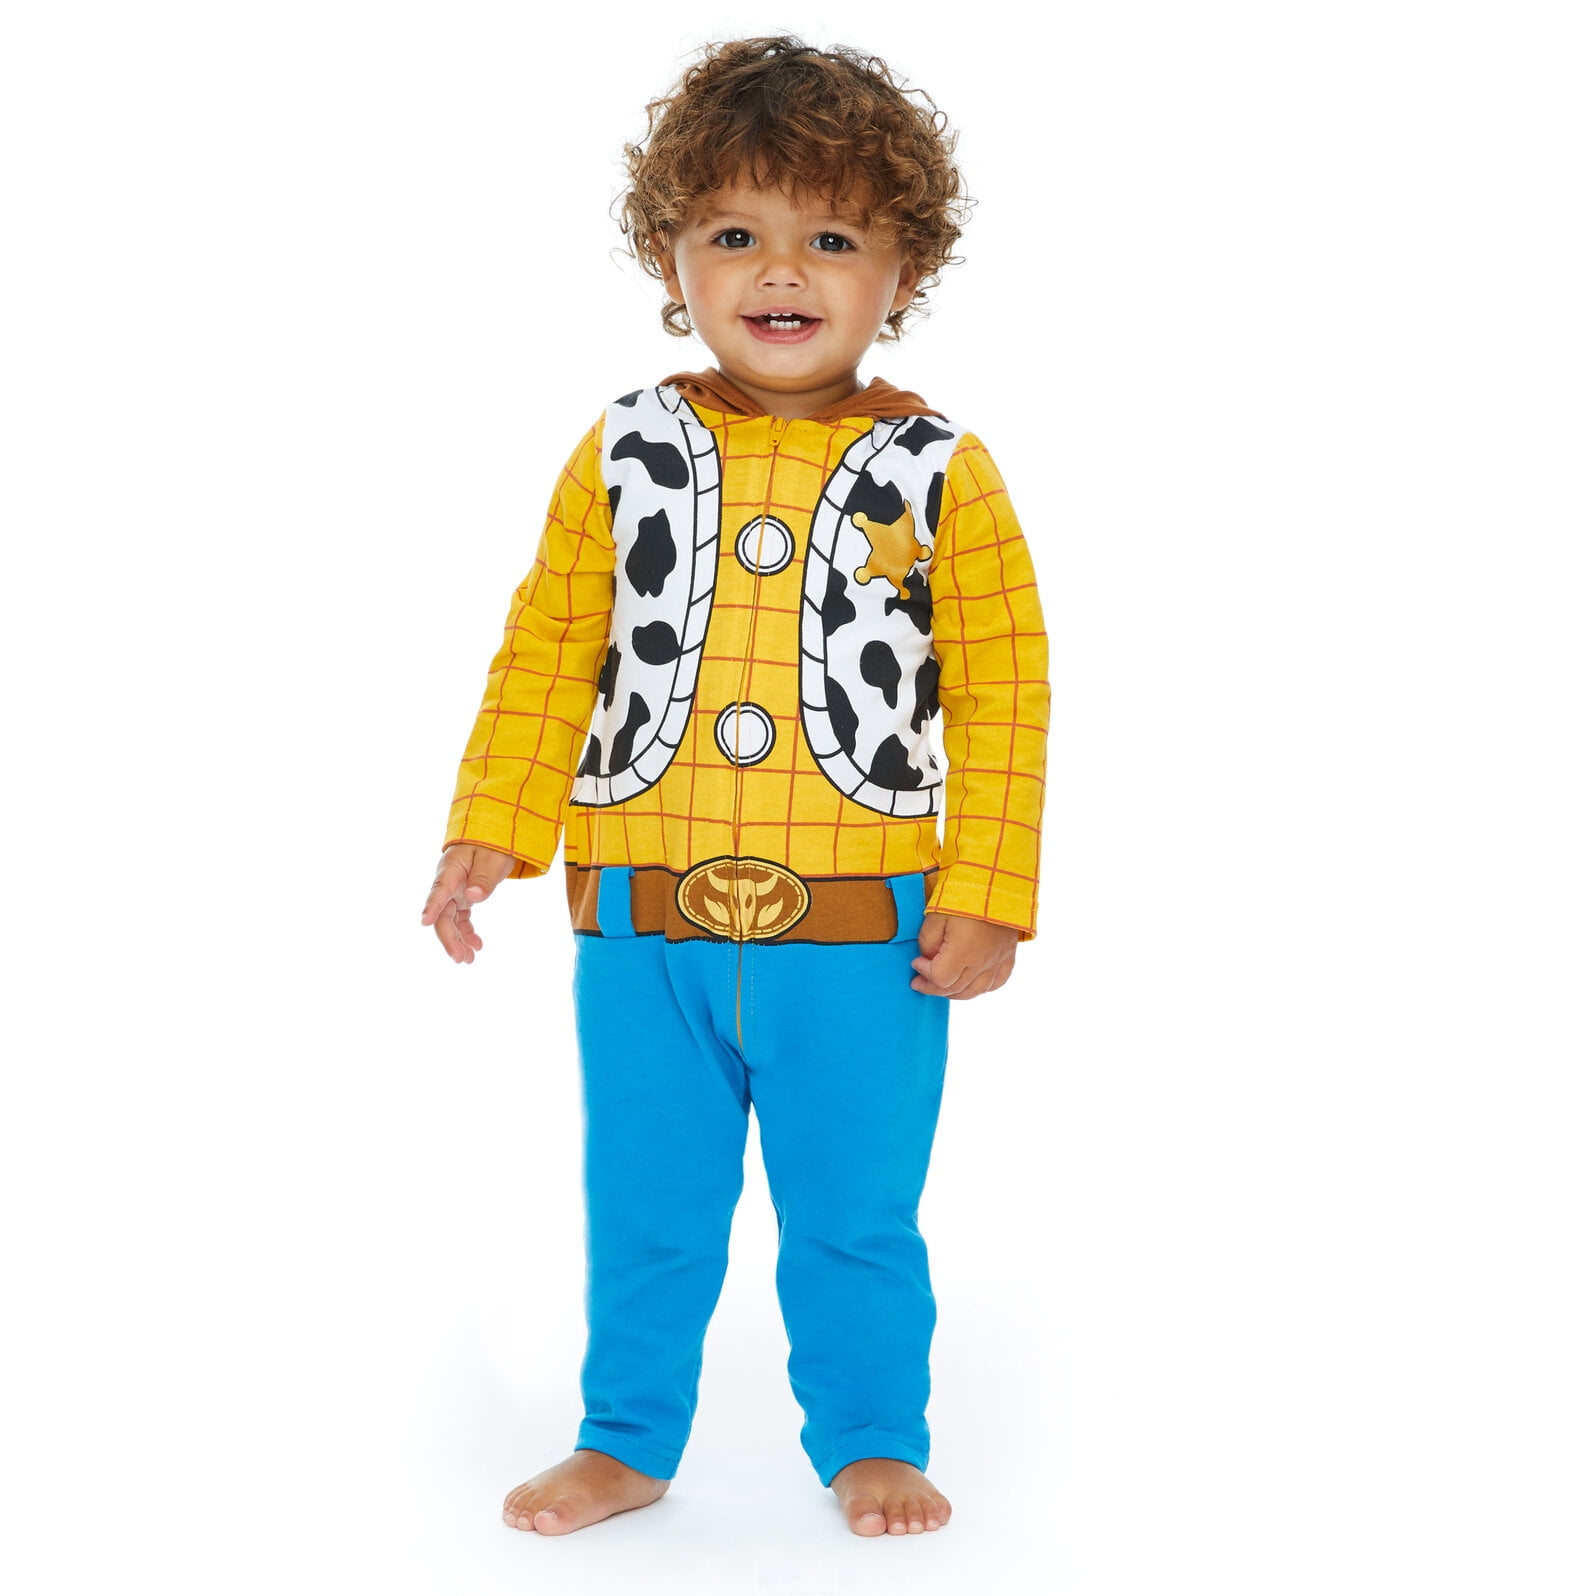 NWT Infant Boy 3 pc Outfit Carter's Shirt Creeper Pants Penguin Polar Bear Dog 